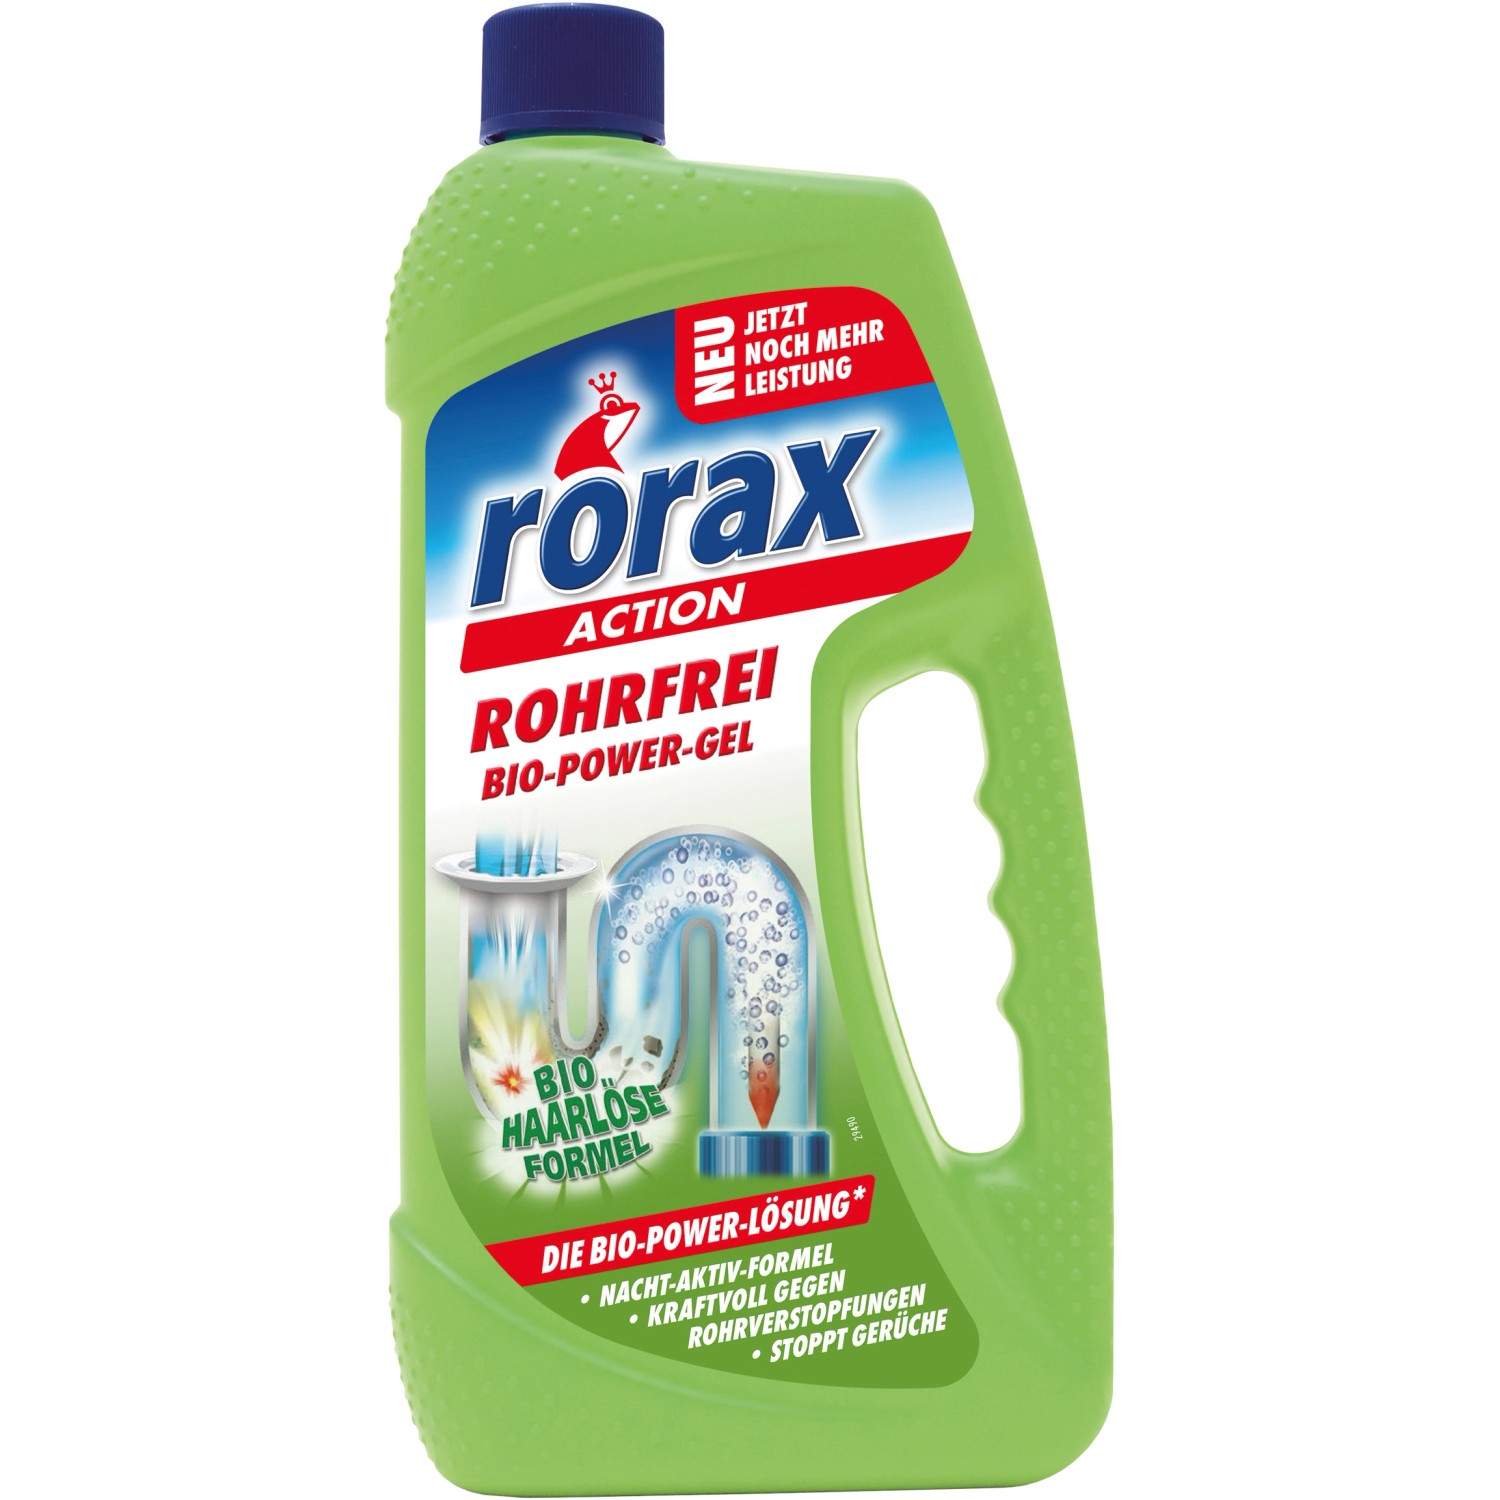 Rorax Rohrfrei Bio-Power-Gel 1 ltr